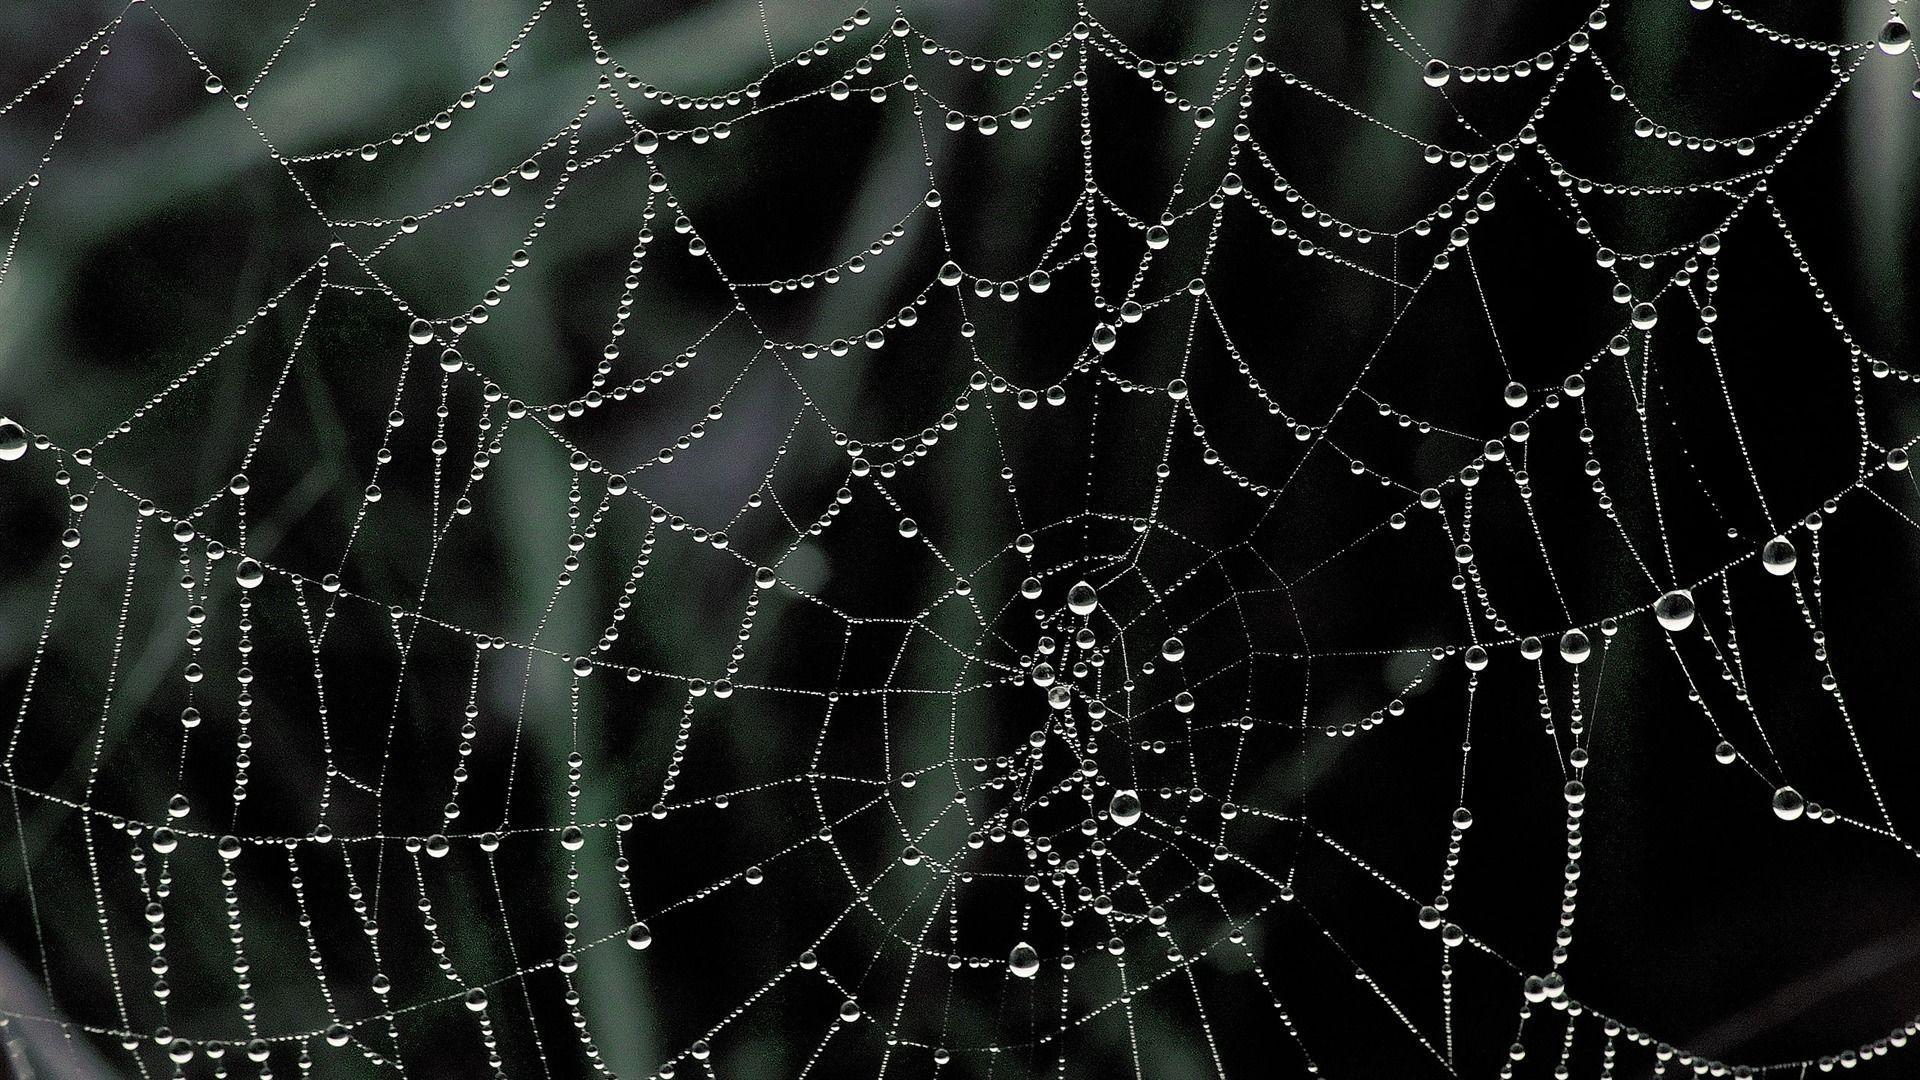 Dew Covered Spider Web Nature Landscape Wallpaper Selected